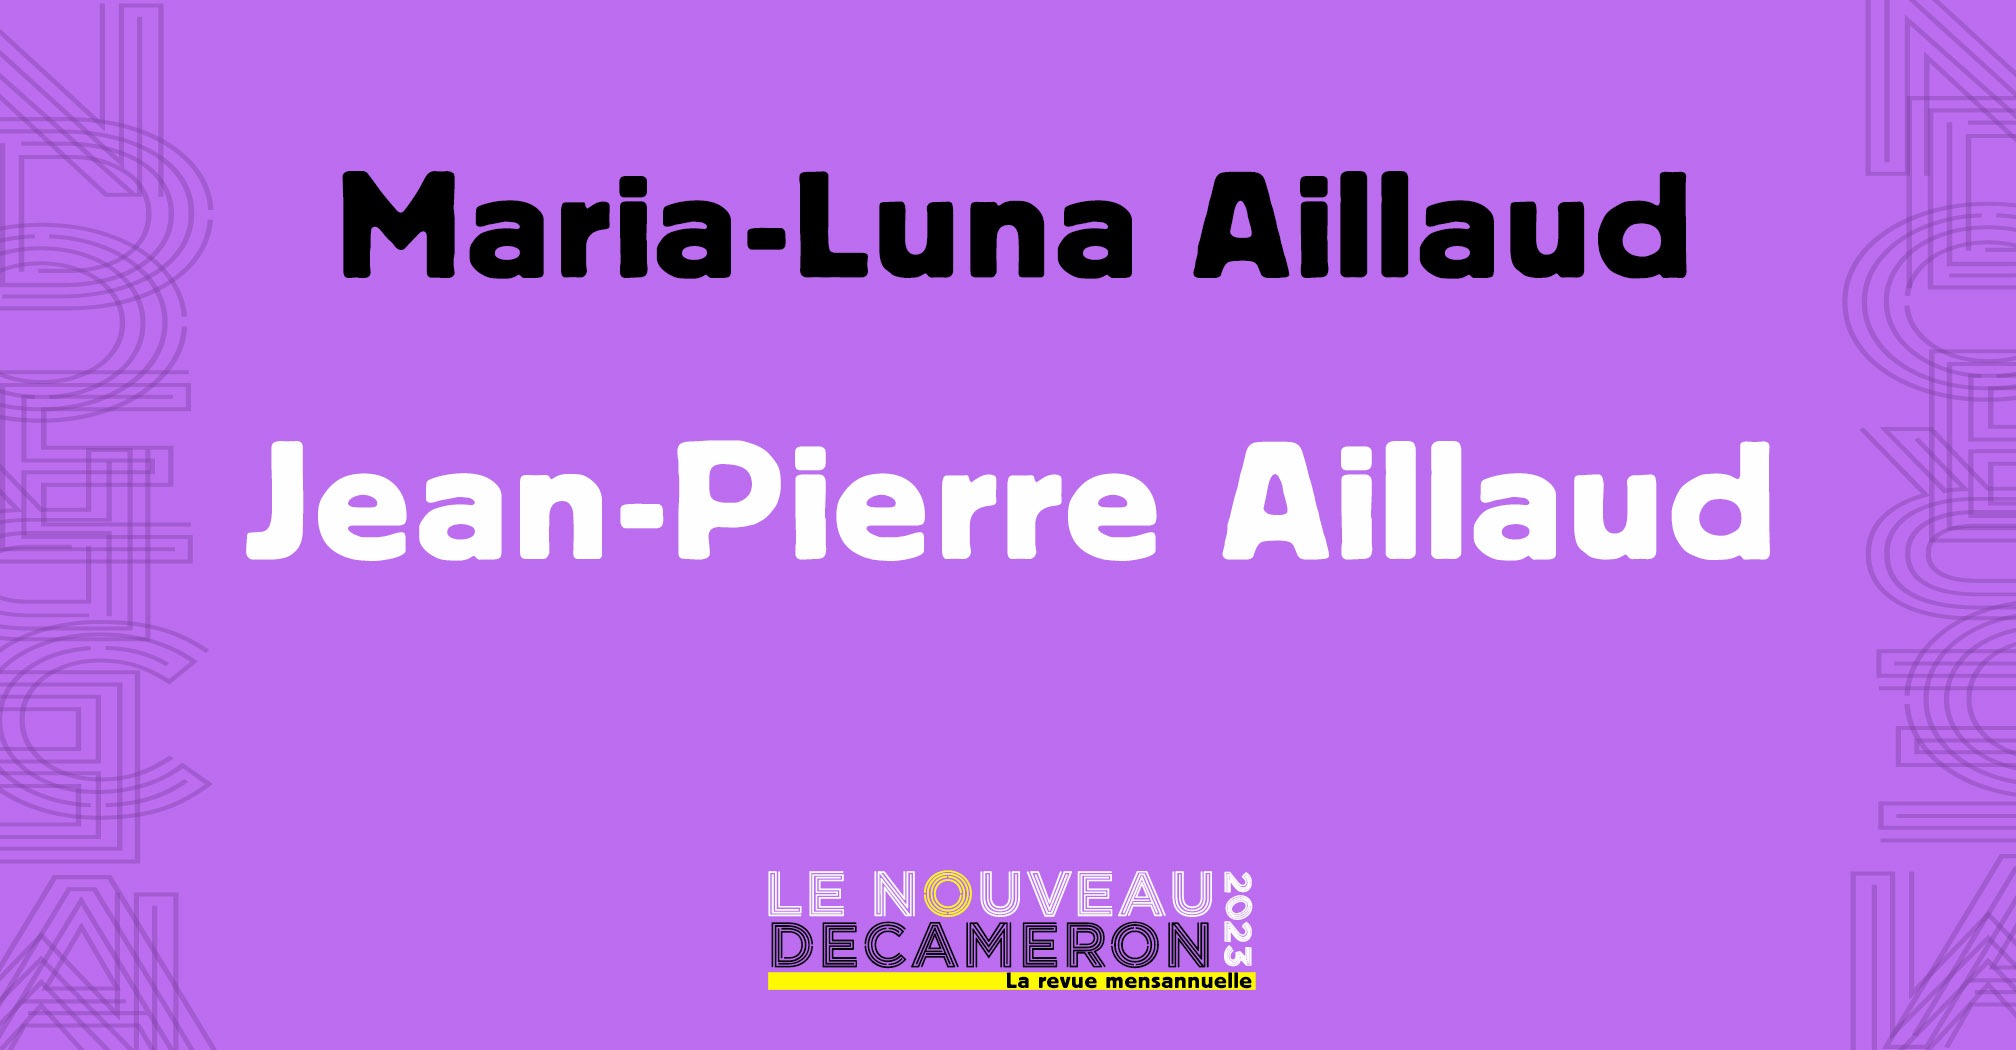 Maria-Luna Aillaud - Jean-Pierre Aillaud